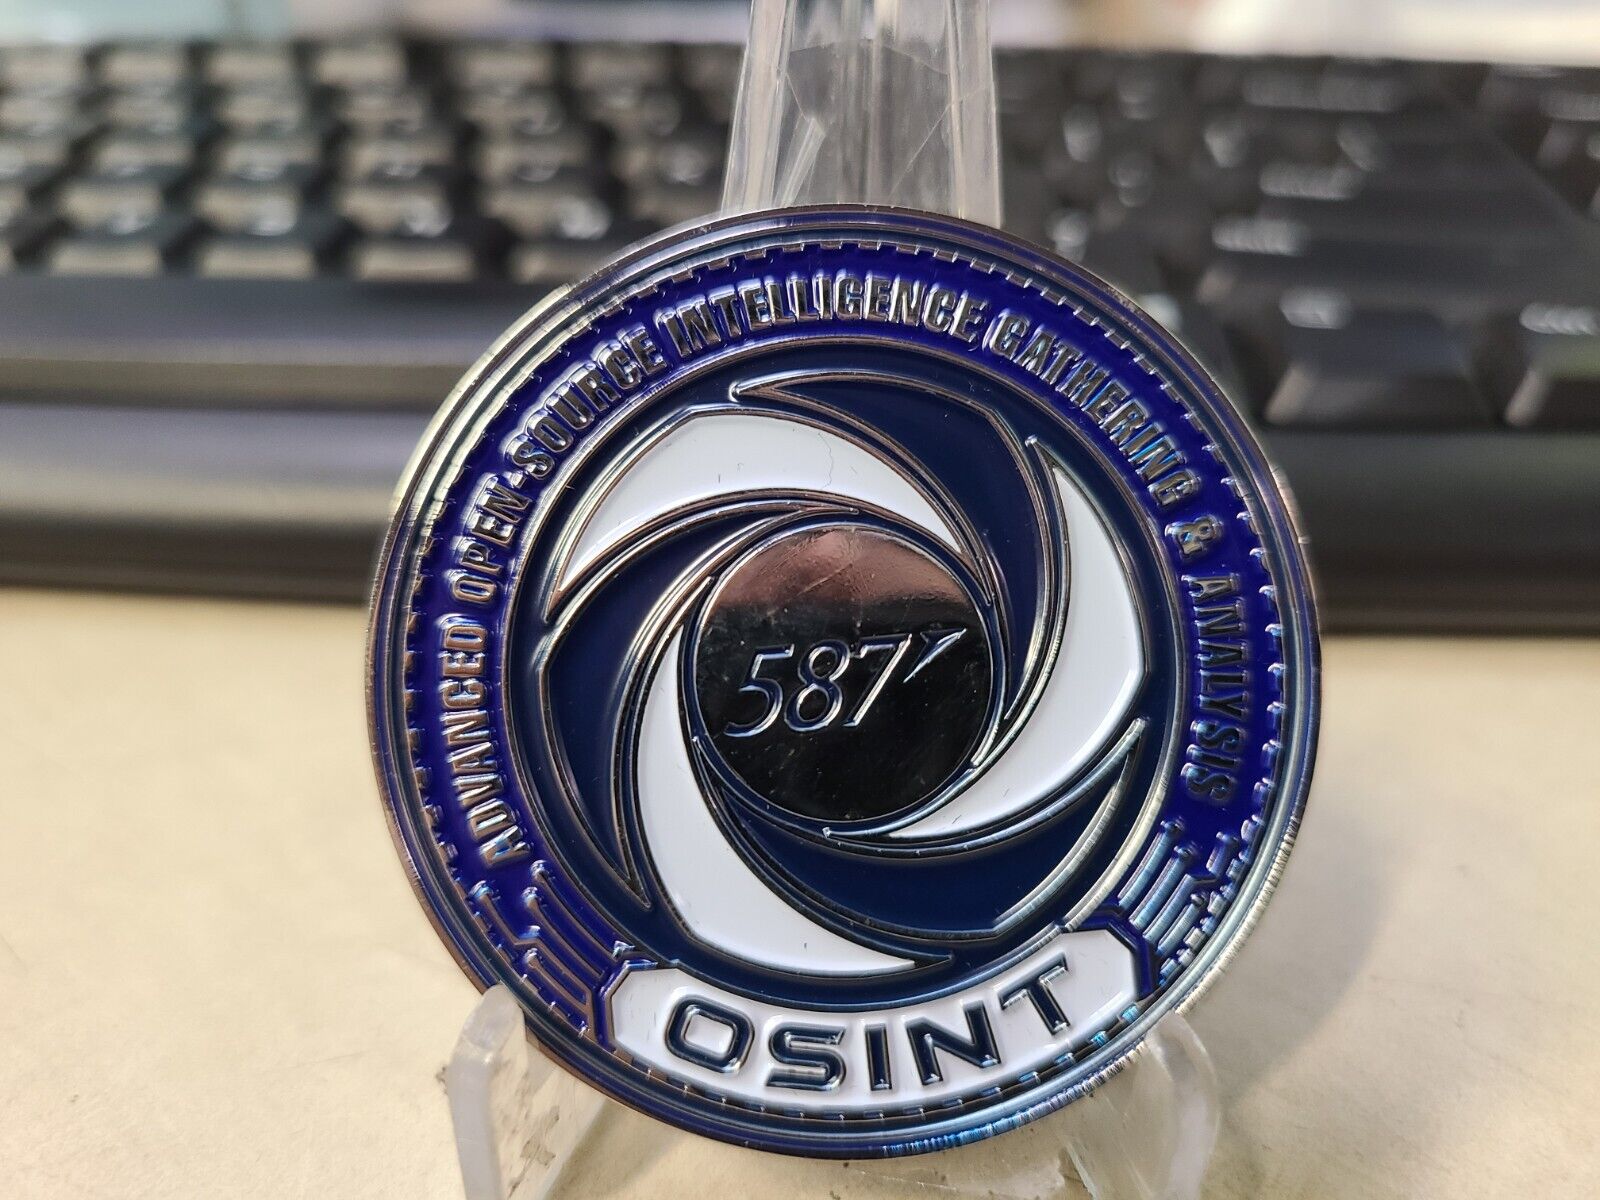 SEC 587 OSINT Advanced Open Source Intelligence Challenge Coin